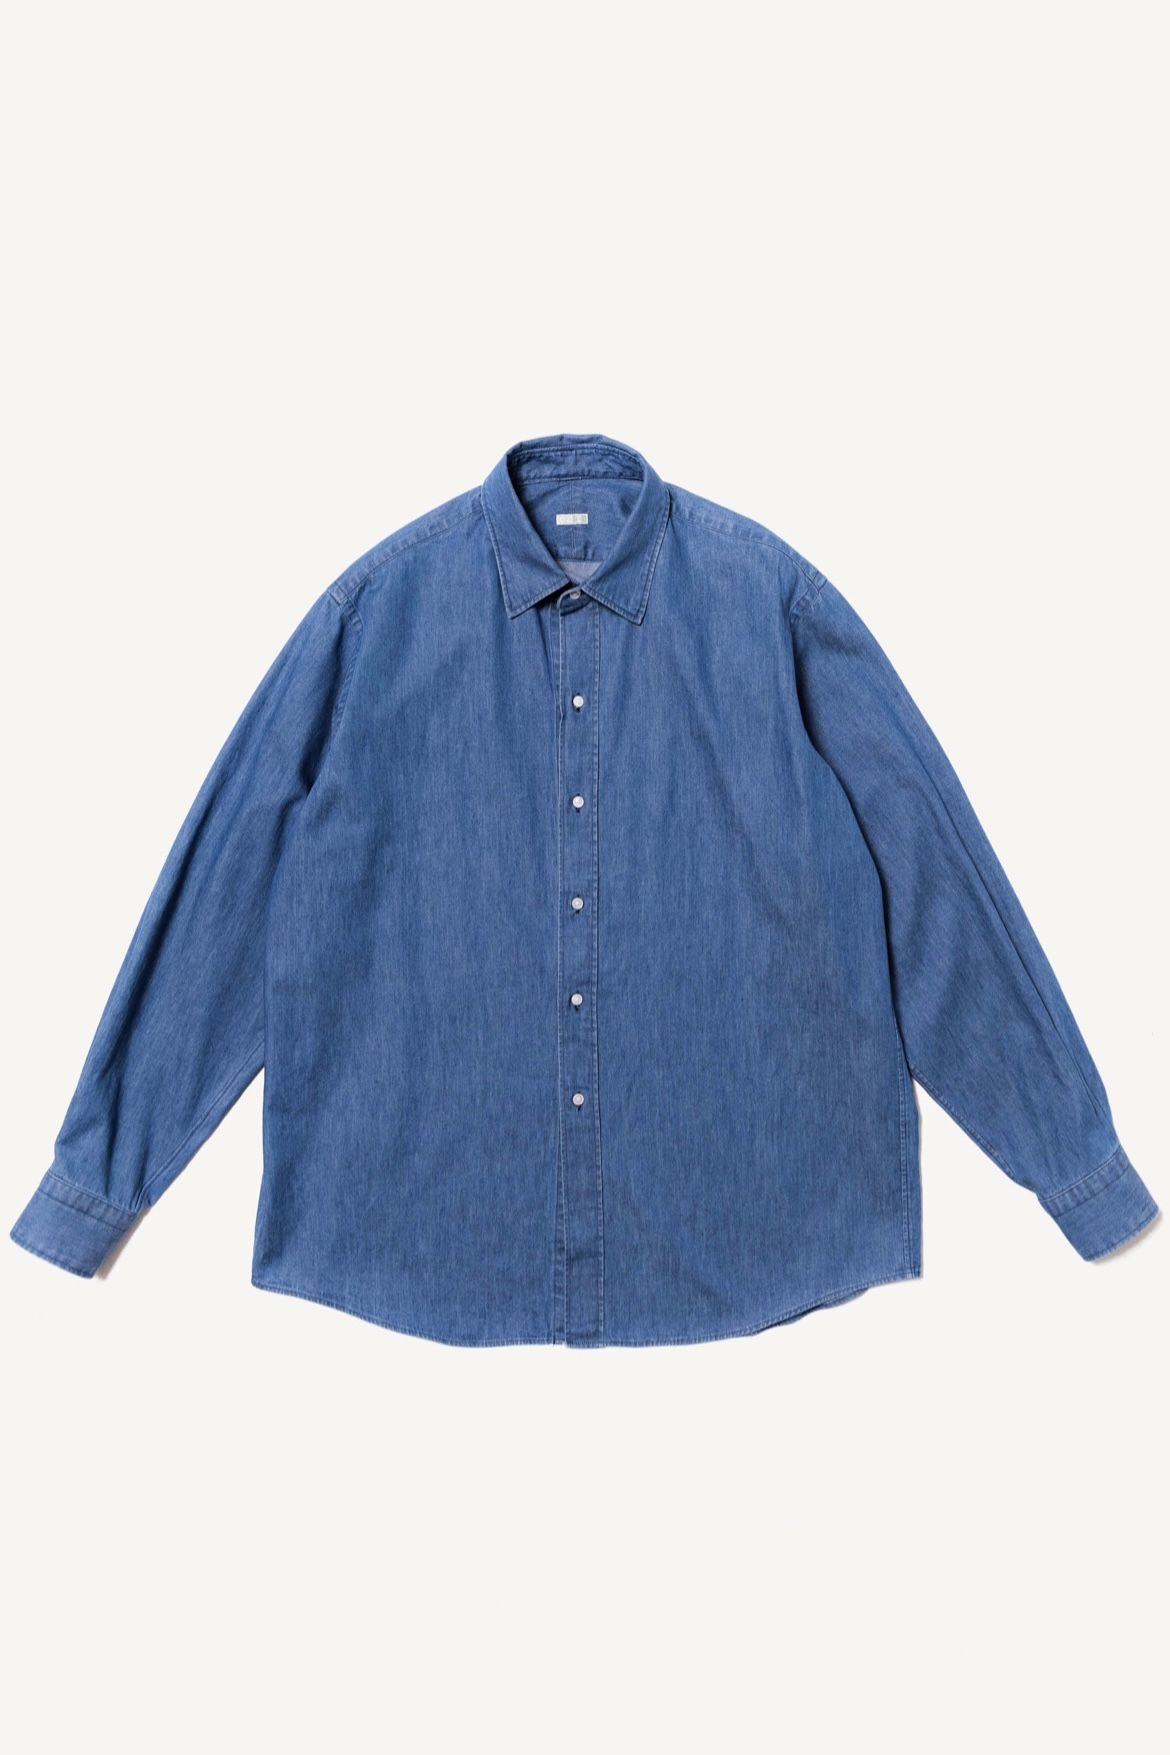 A.PRESSE   Washed Denim Shirt  indigo  aw   asterisk